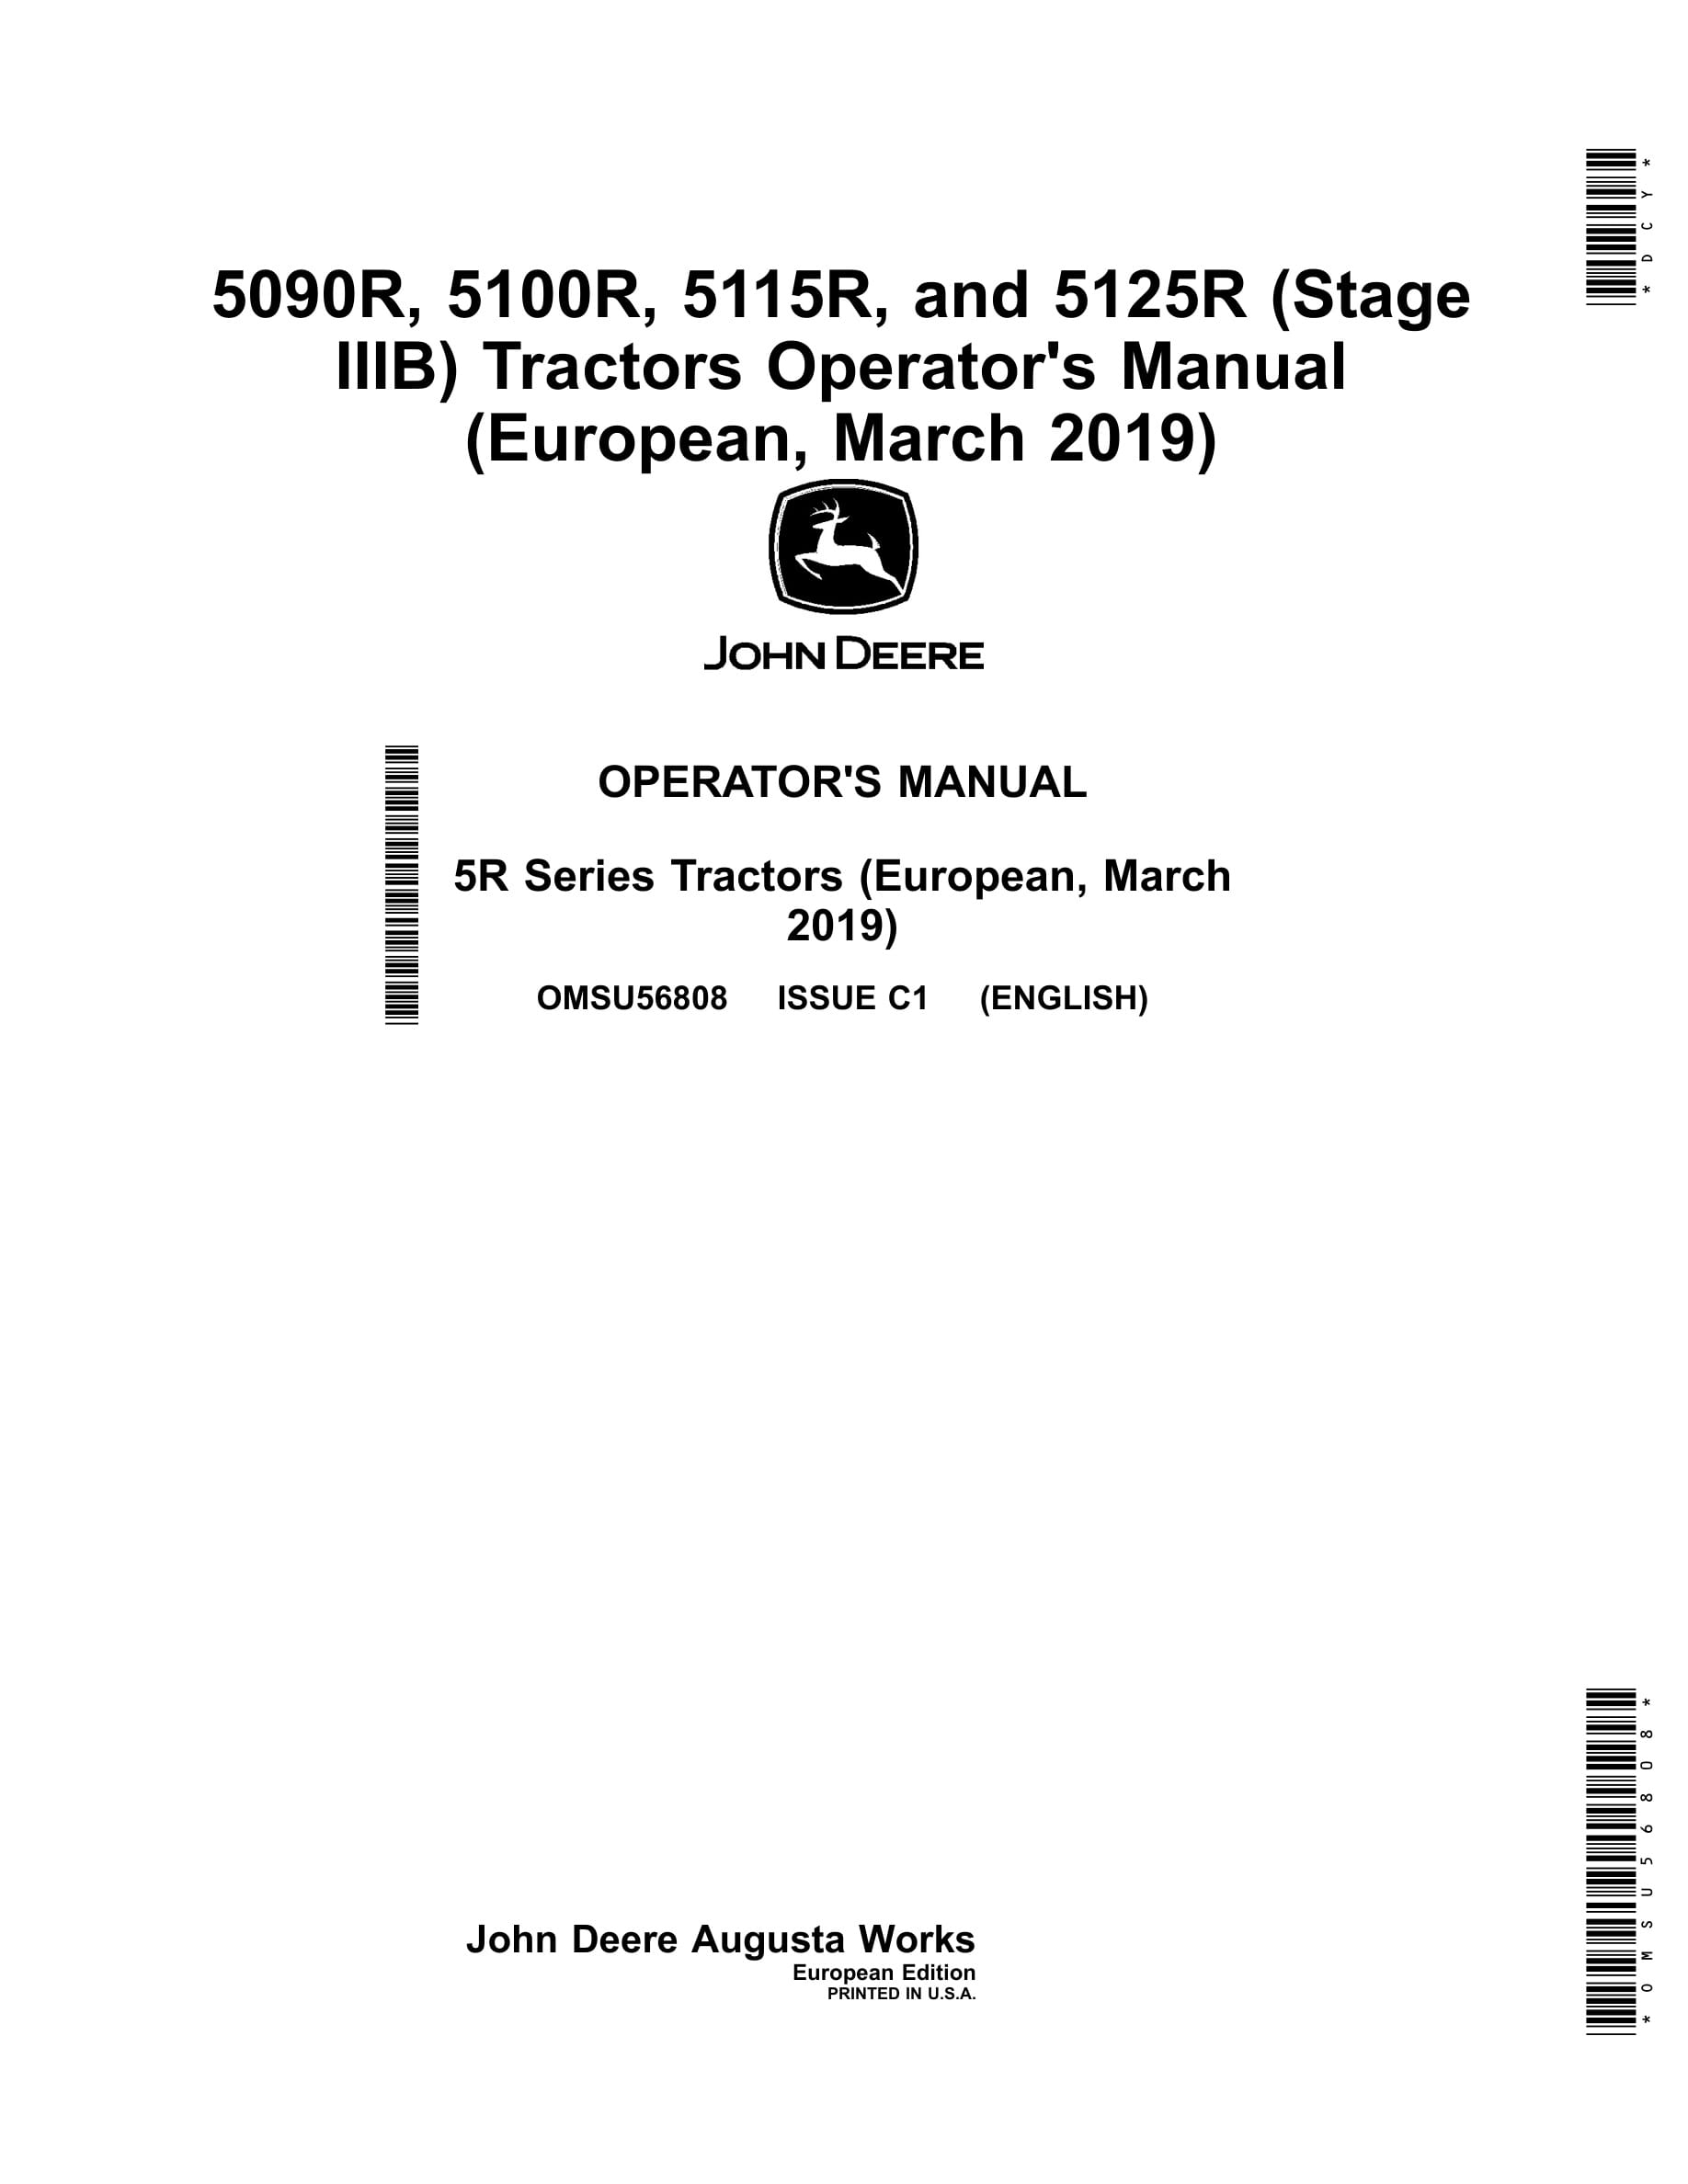 John Deere 5090r, 5100r, 5115r, And 5125r (stage Iiib) Tractors Operator Manuals OMSU56808-1